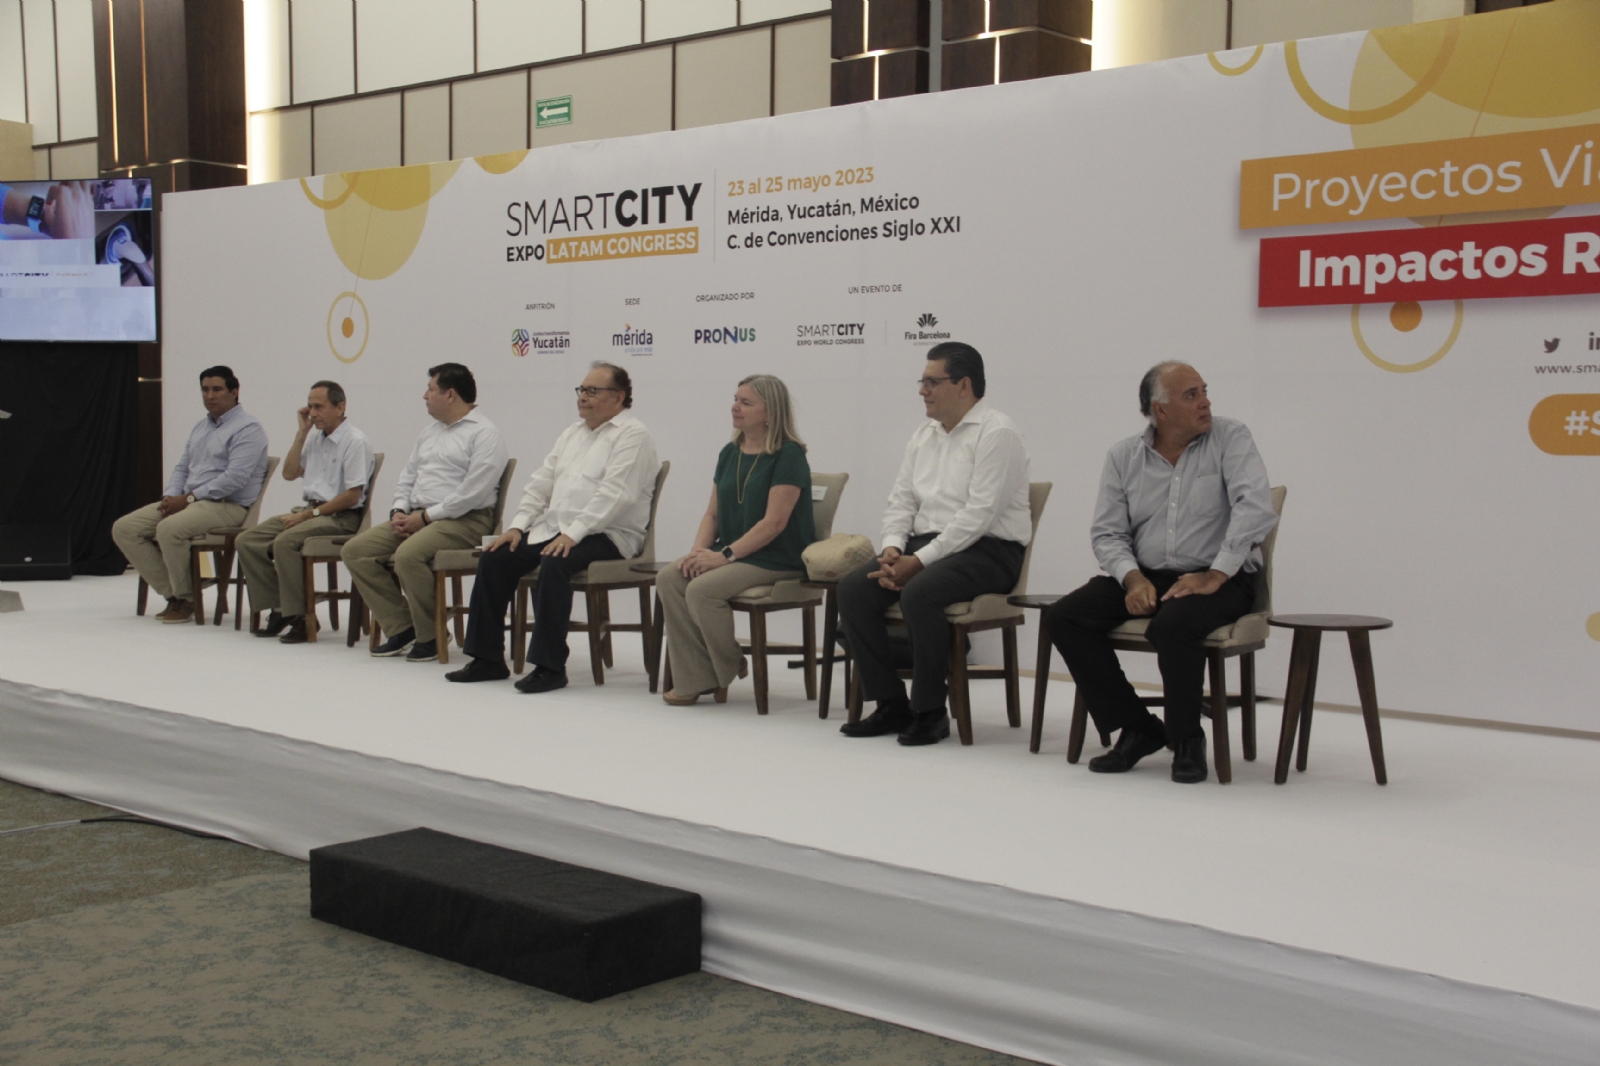 Prevén la llegada de 10 mil personas al Smart City Expo Latam Congress en Mérida